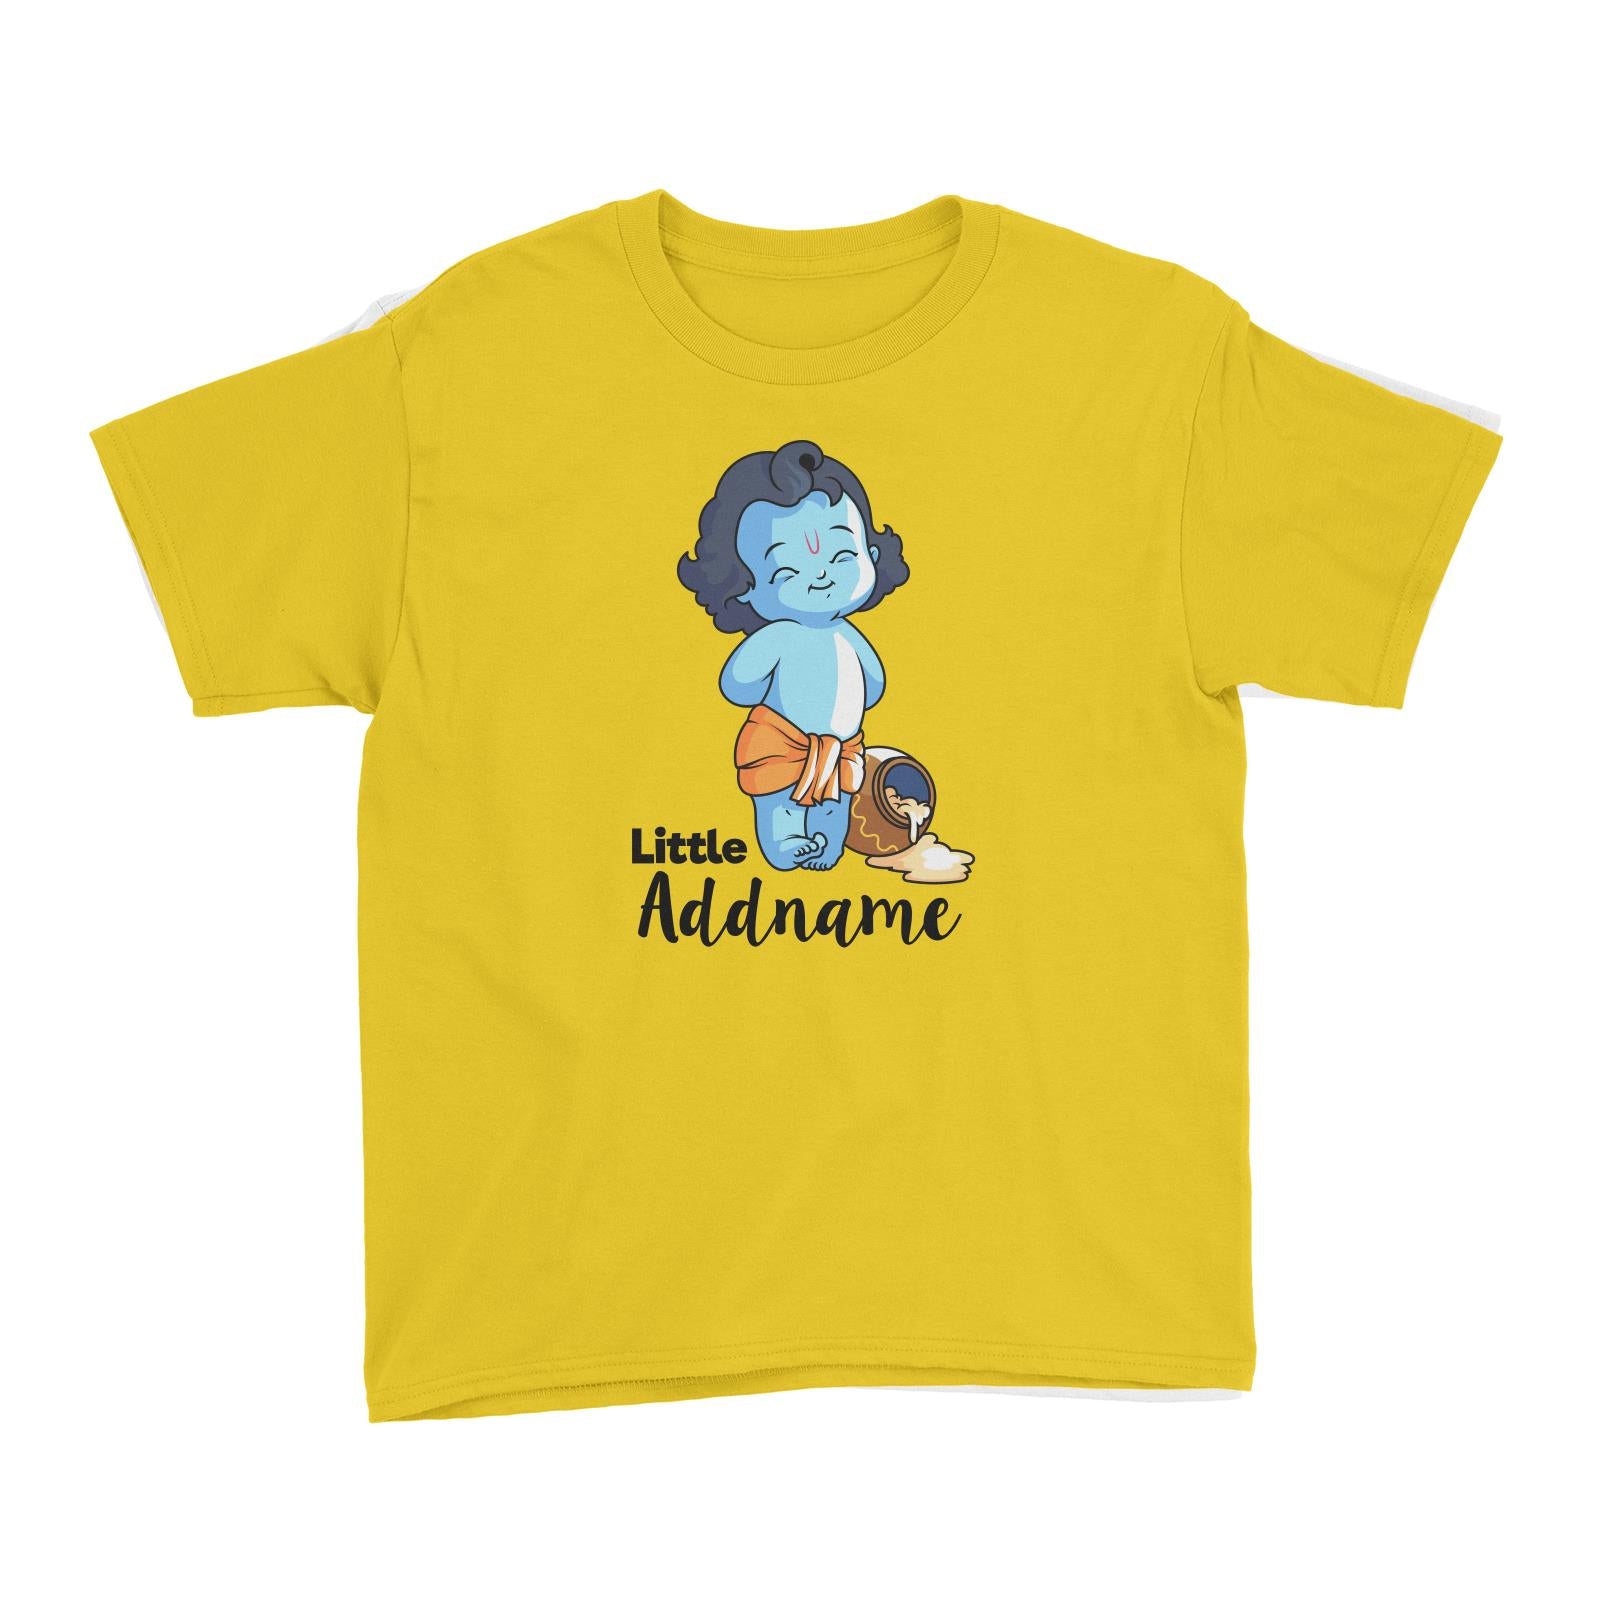 Cute Krishna Standing Little Addname Kid's T-Shirt